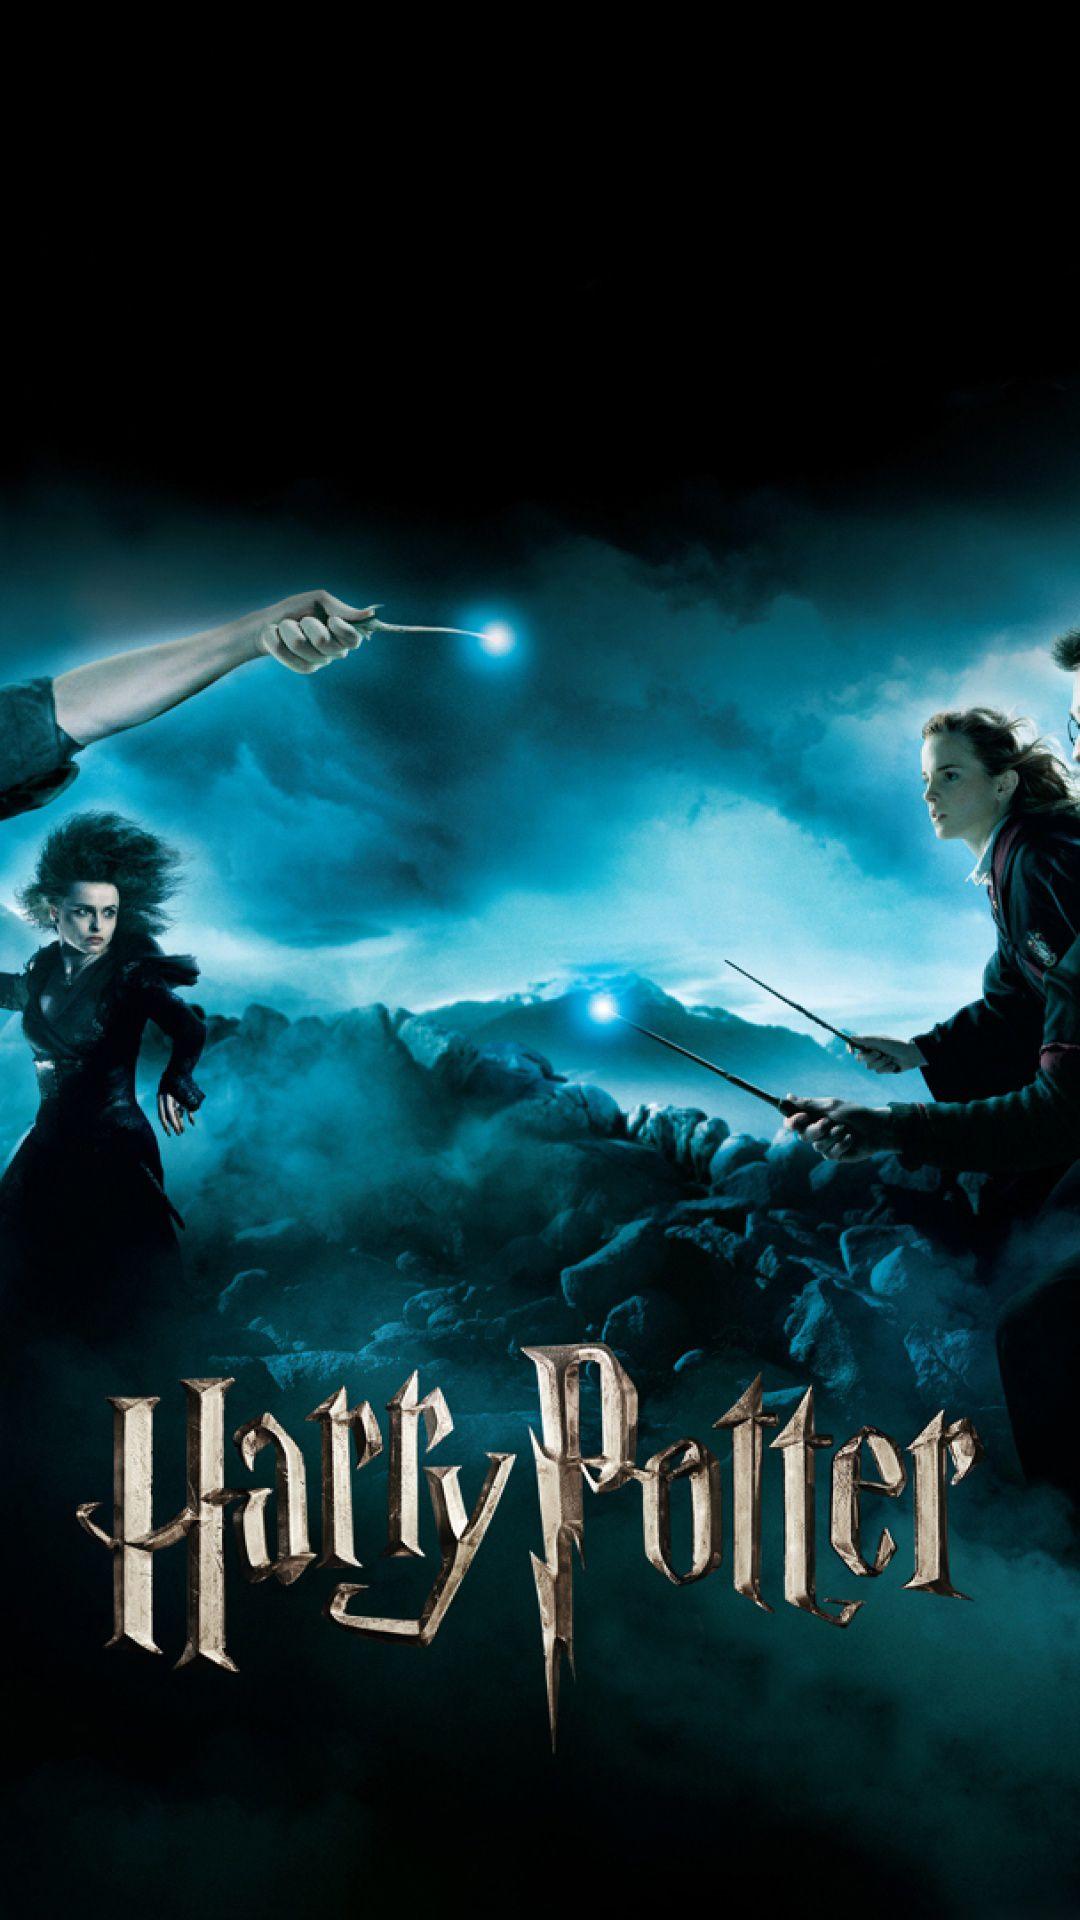 Harry Potter And The Deathly Hallows Ultra HD Desktop Background Wallpaper  for 4K UHD TV  Widescreen  UltraWide Desktop  Laptop  Tablet   Smartphone